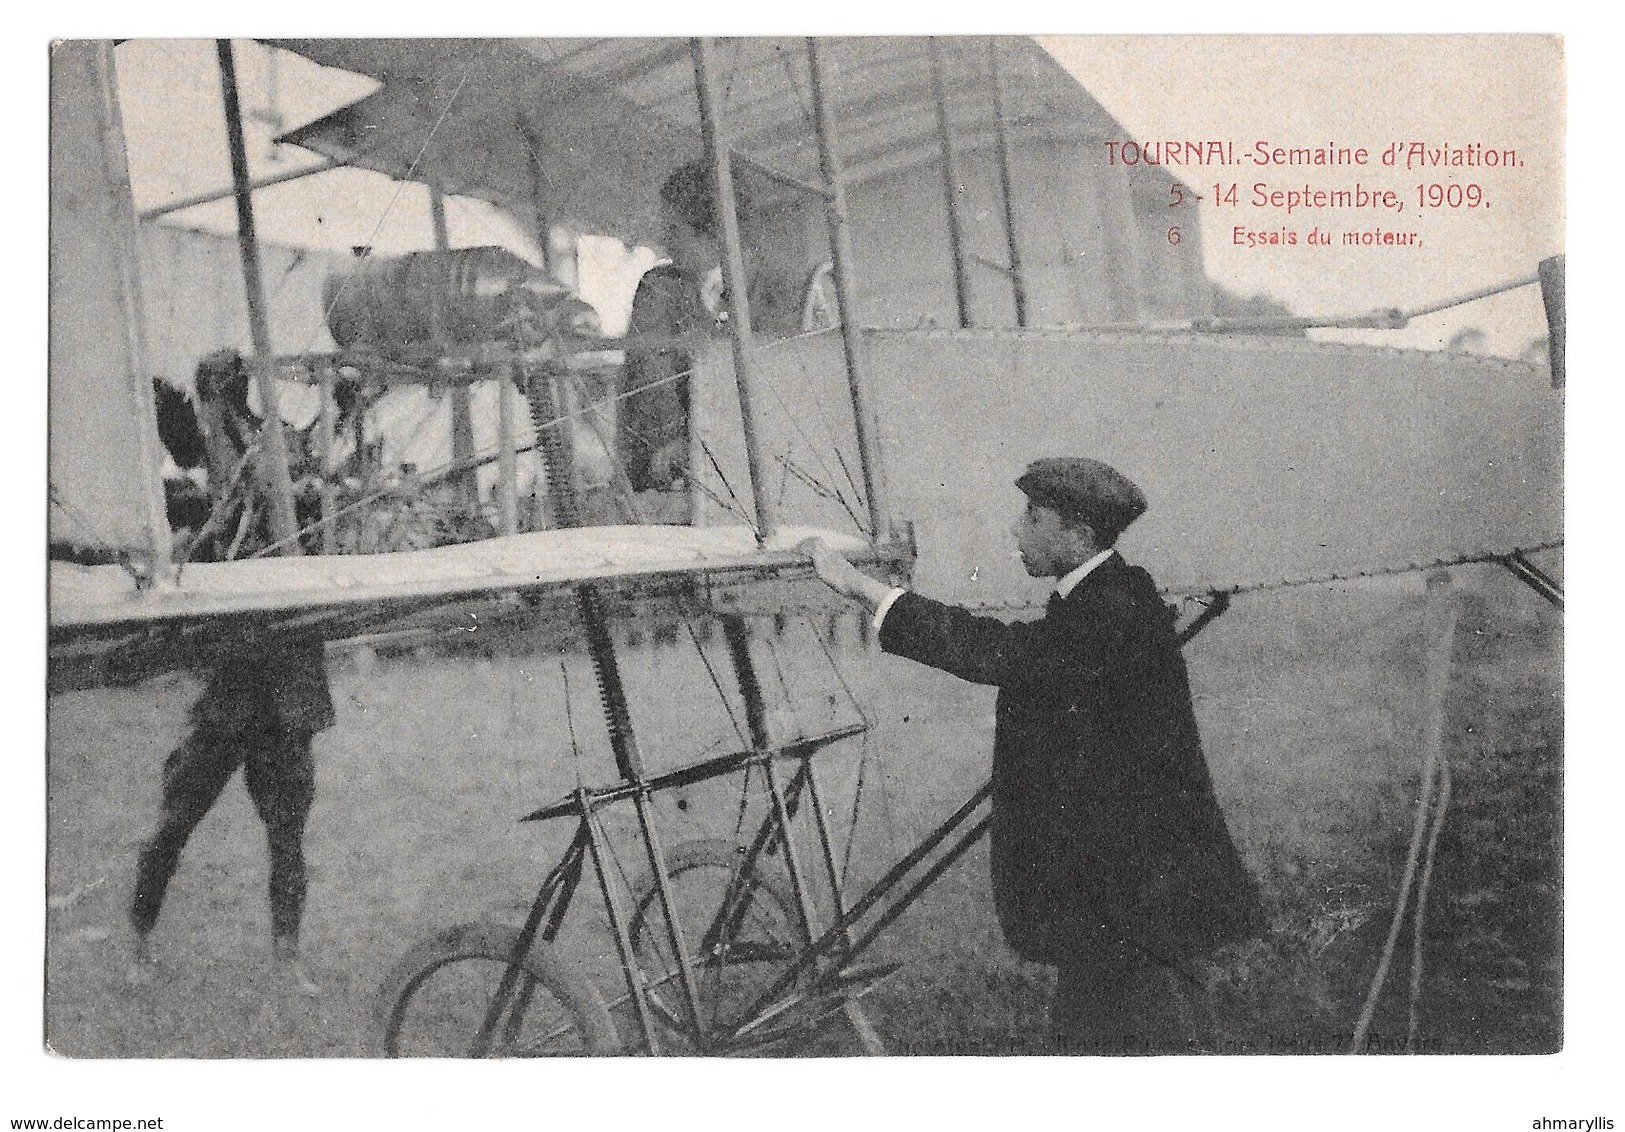 Semaine Aviation De Tournai 5-14 Septembre 1909 Paulhan Essais Du Moteur Climan Ruyssers Non Circulée 6 - Aviateurs